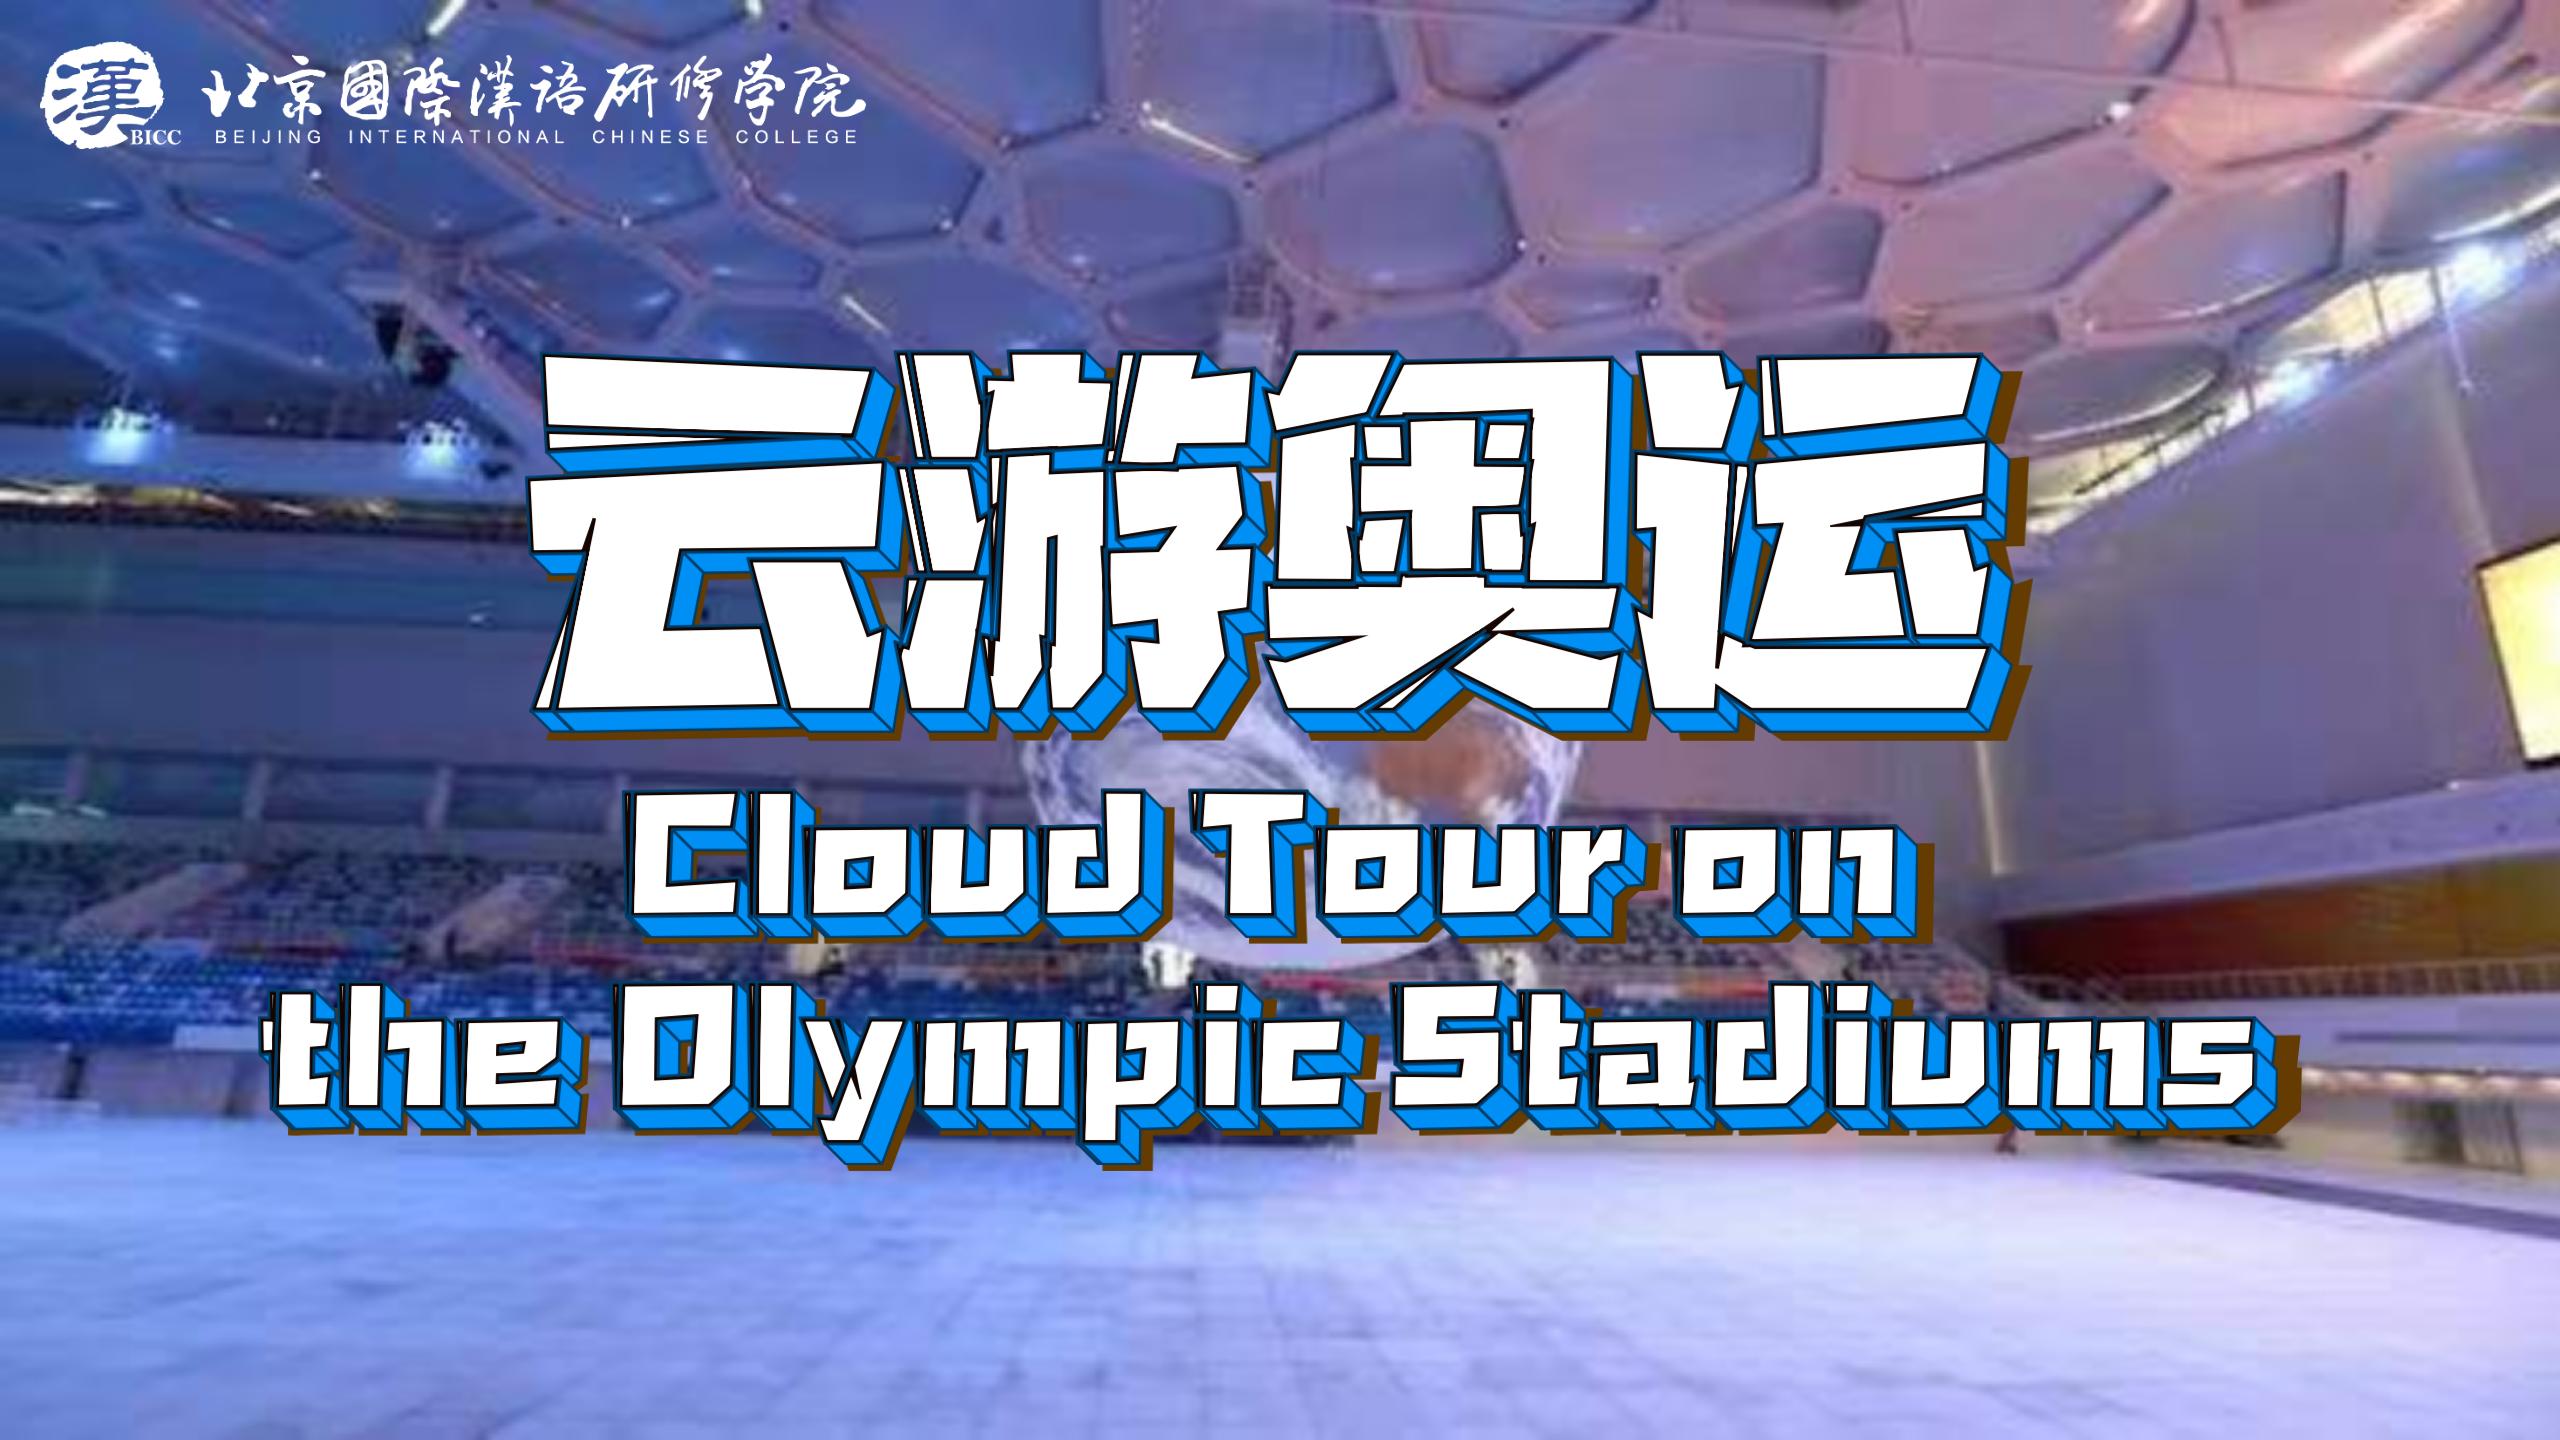 Cloud Tour on the Olympics Stadiums